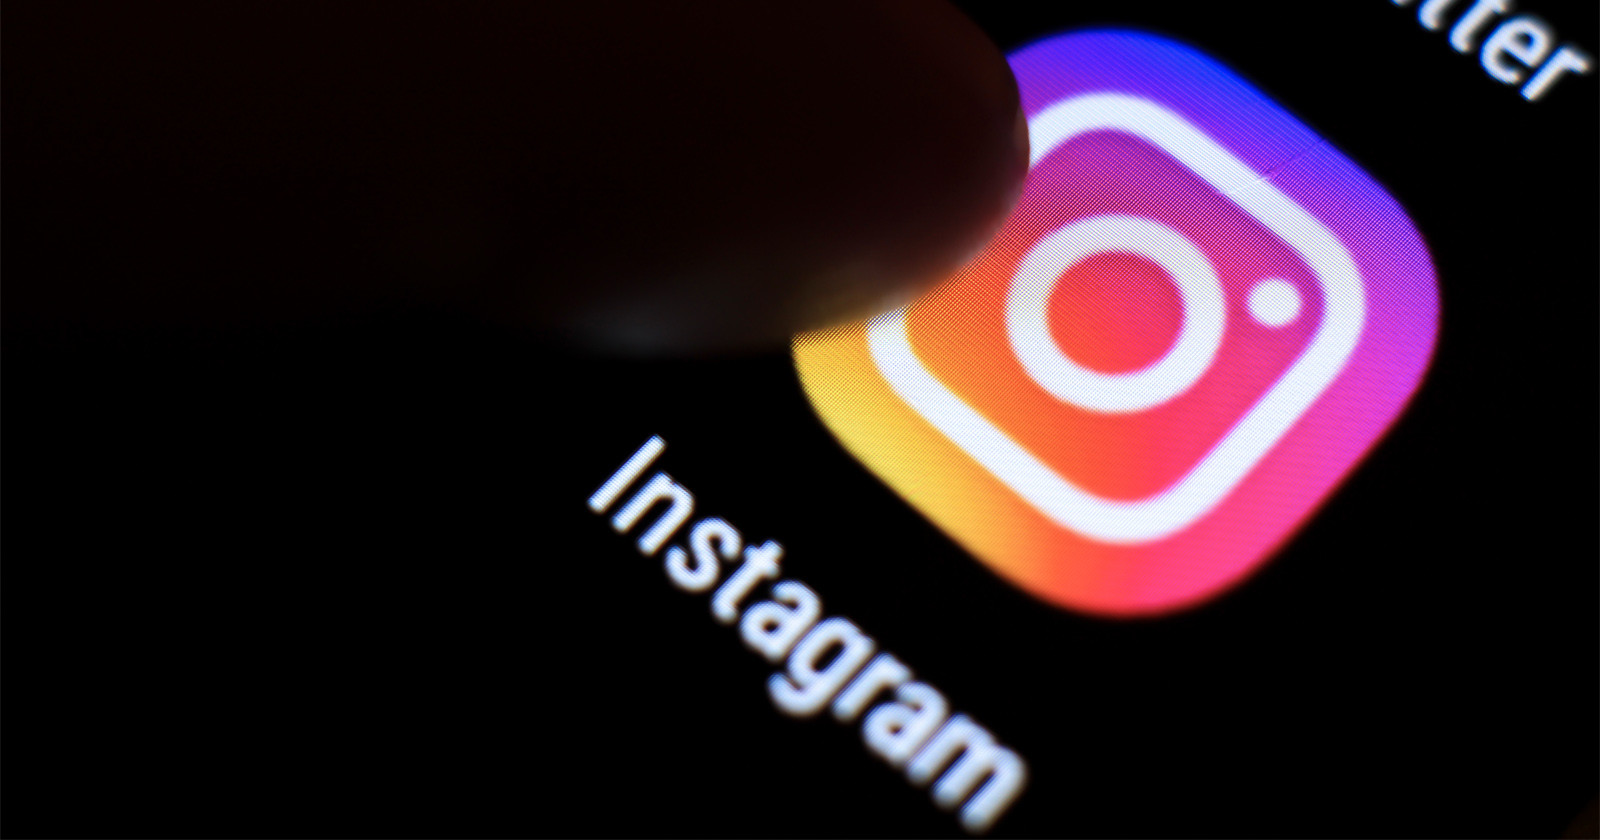  instagram algorithm promotes connects vast network pedophiles 